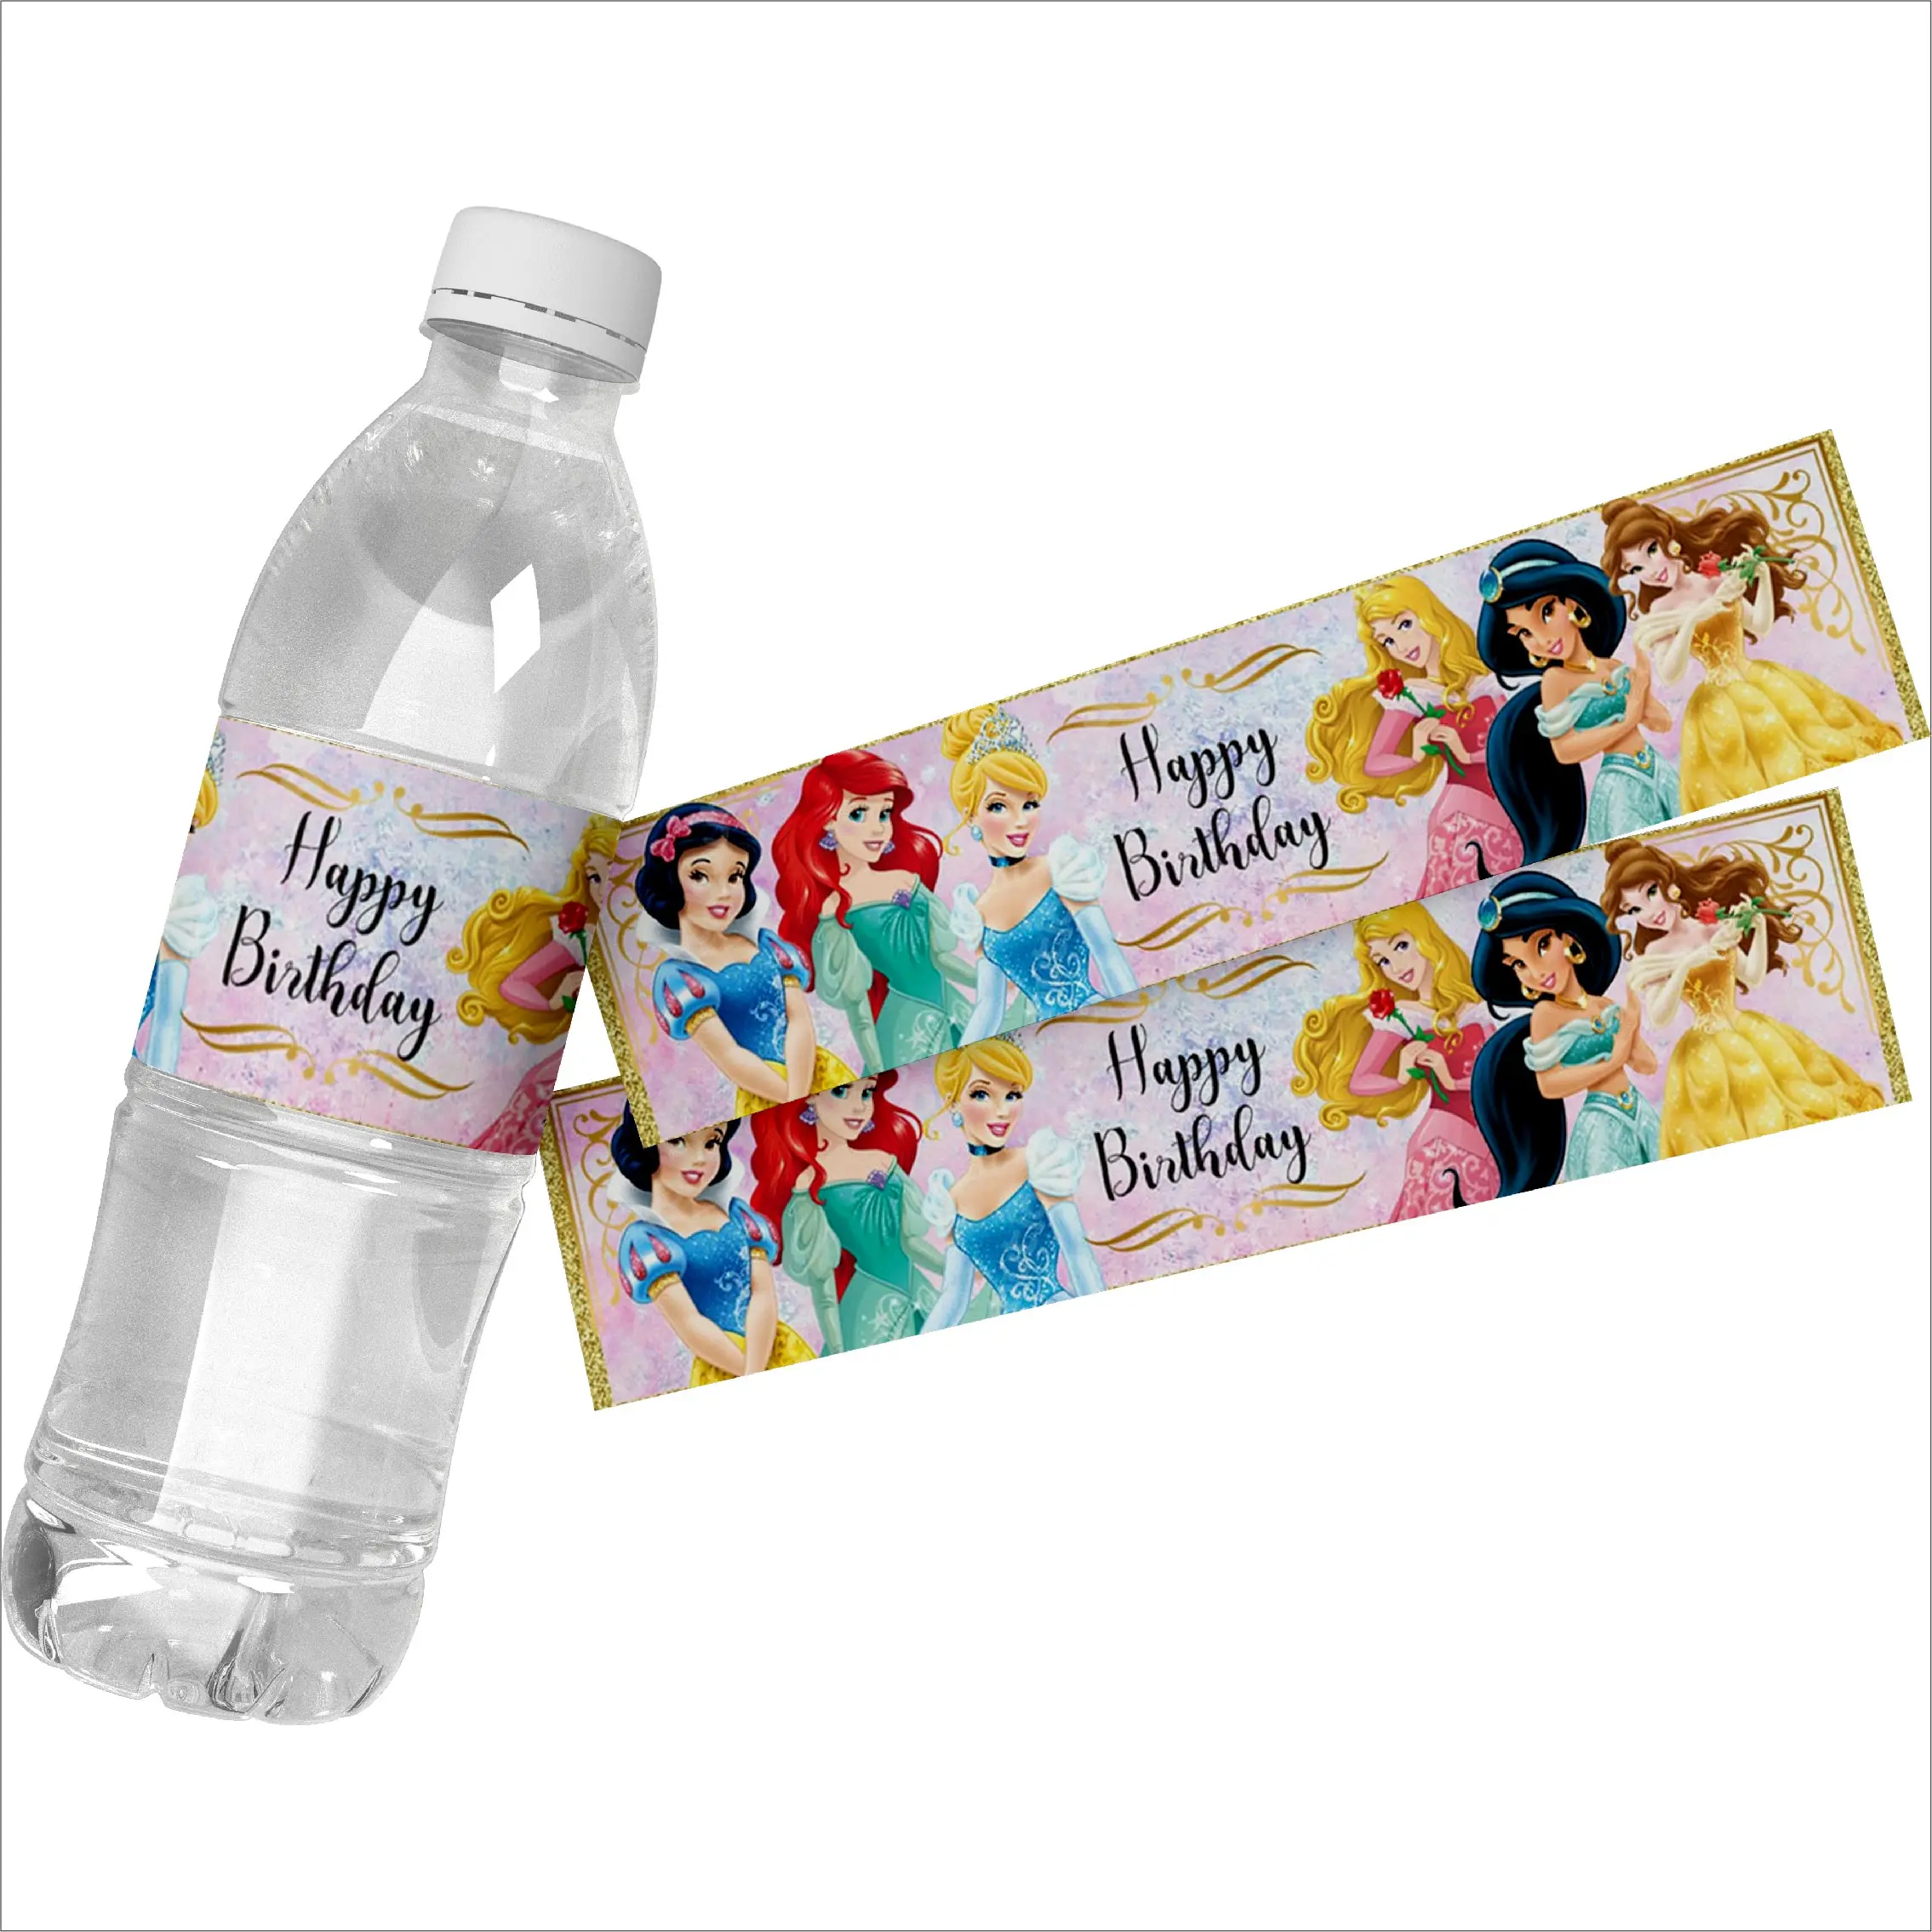 https://ae01.alicdn.com/kf/S1a97f57c52334a4298ebb309558520b3J/24pcs-Disney-Princess-Cartoon-Theme-Decorate-Water-Bottle-Self-adhesive-Label-Stickers-Kid-Birthday-Baby-Shower.jpg